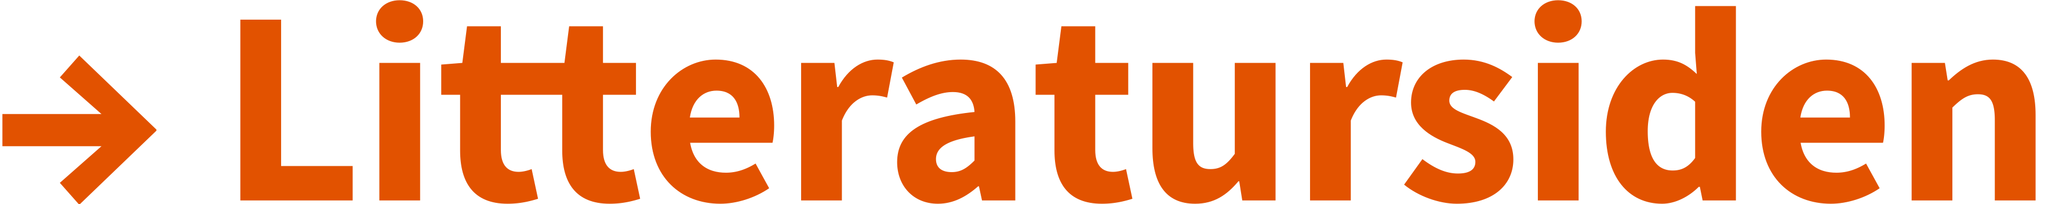 Litteratursiden logo